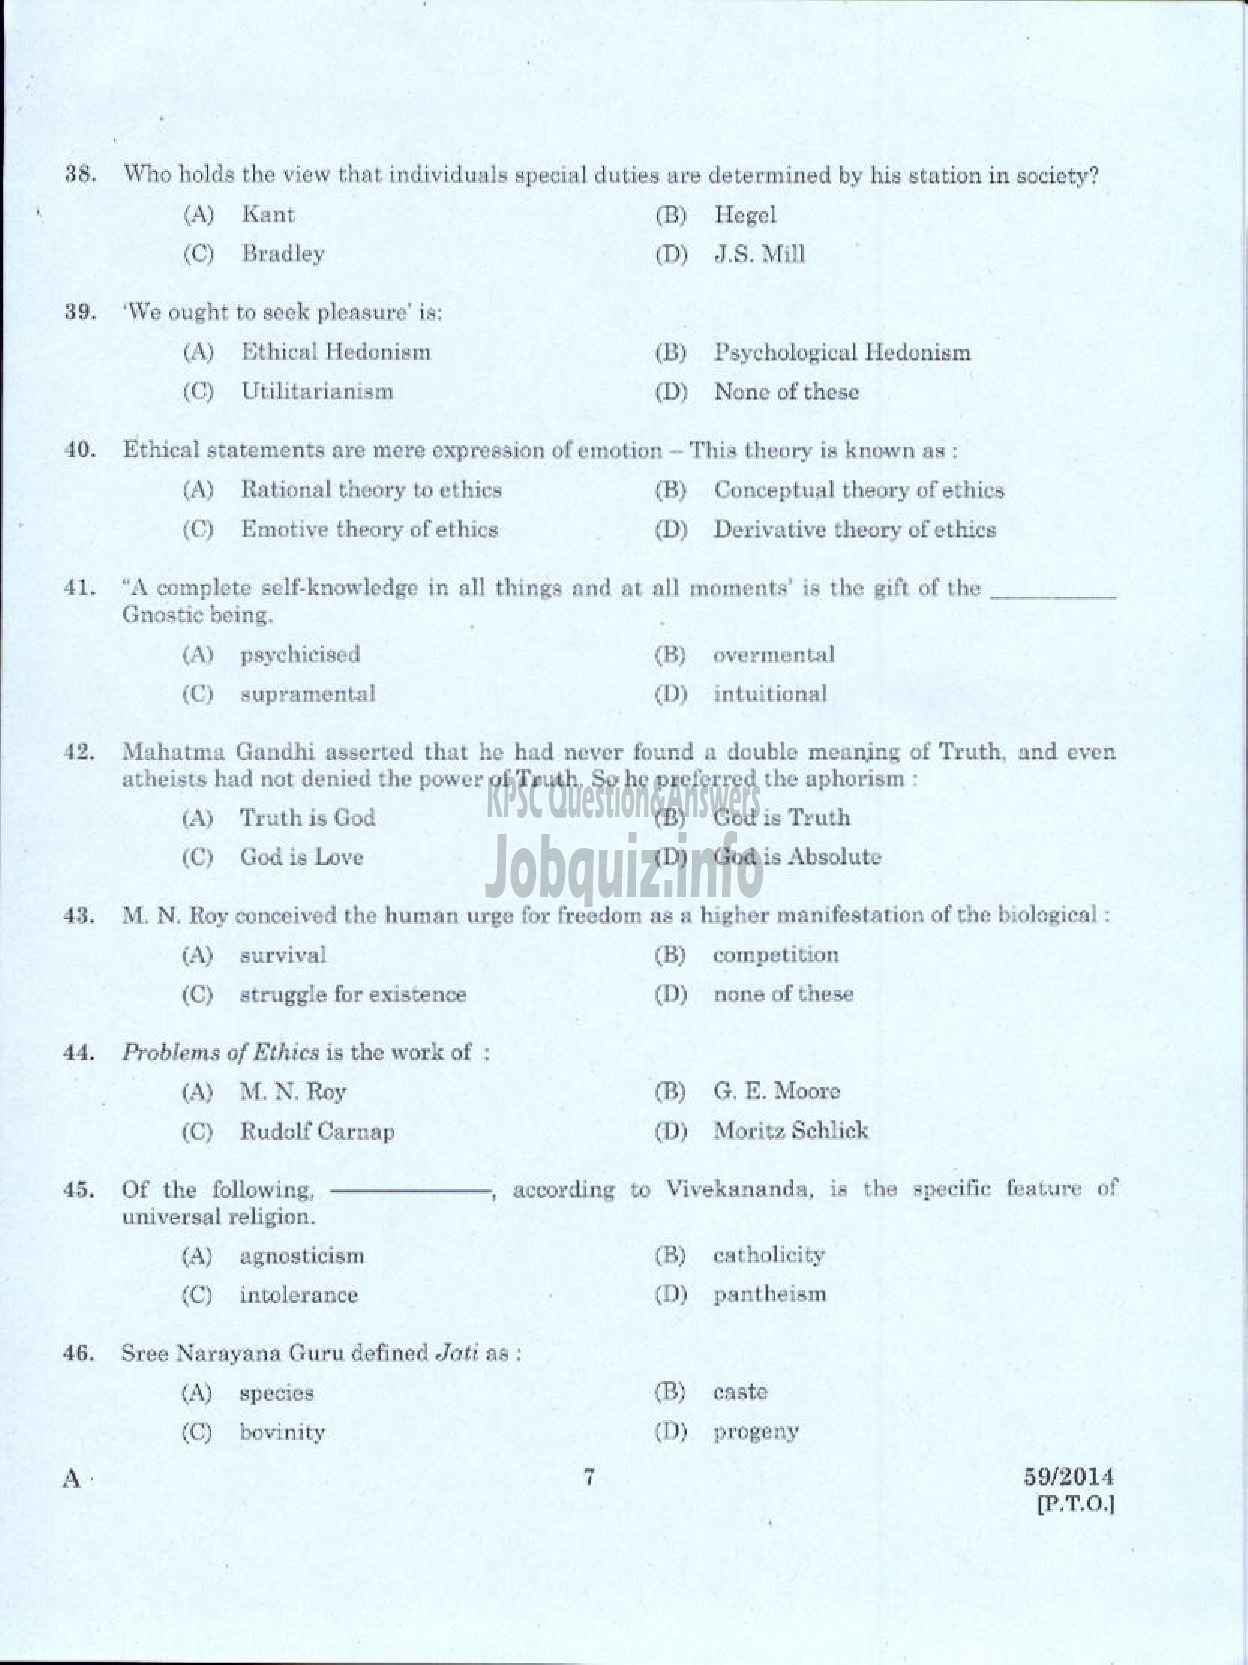 Kerala PSC Question Paper - LECTURER IN PHILOSOPHY KERALA COLLEGIATE EDUCATION-5